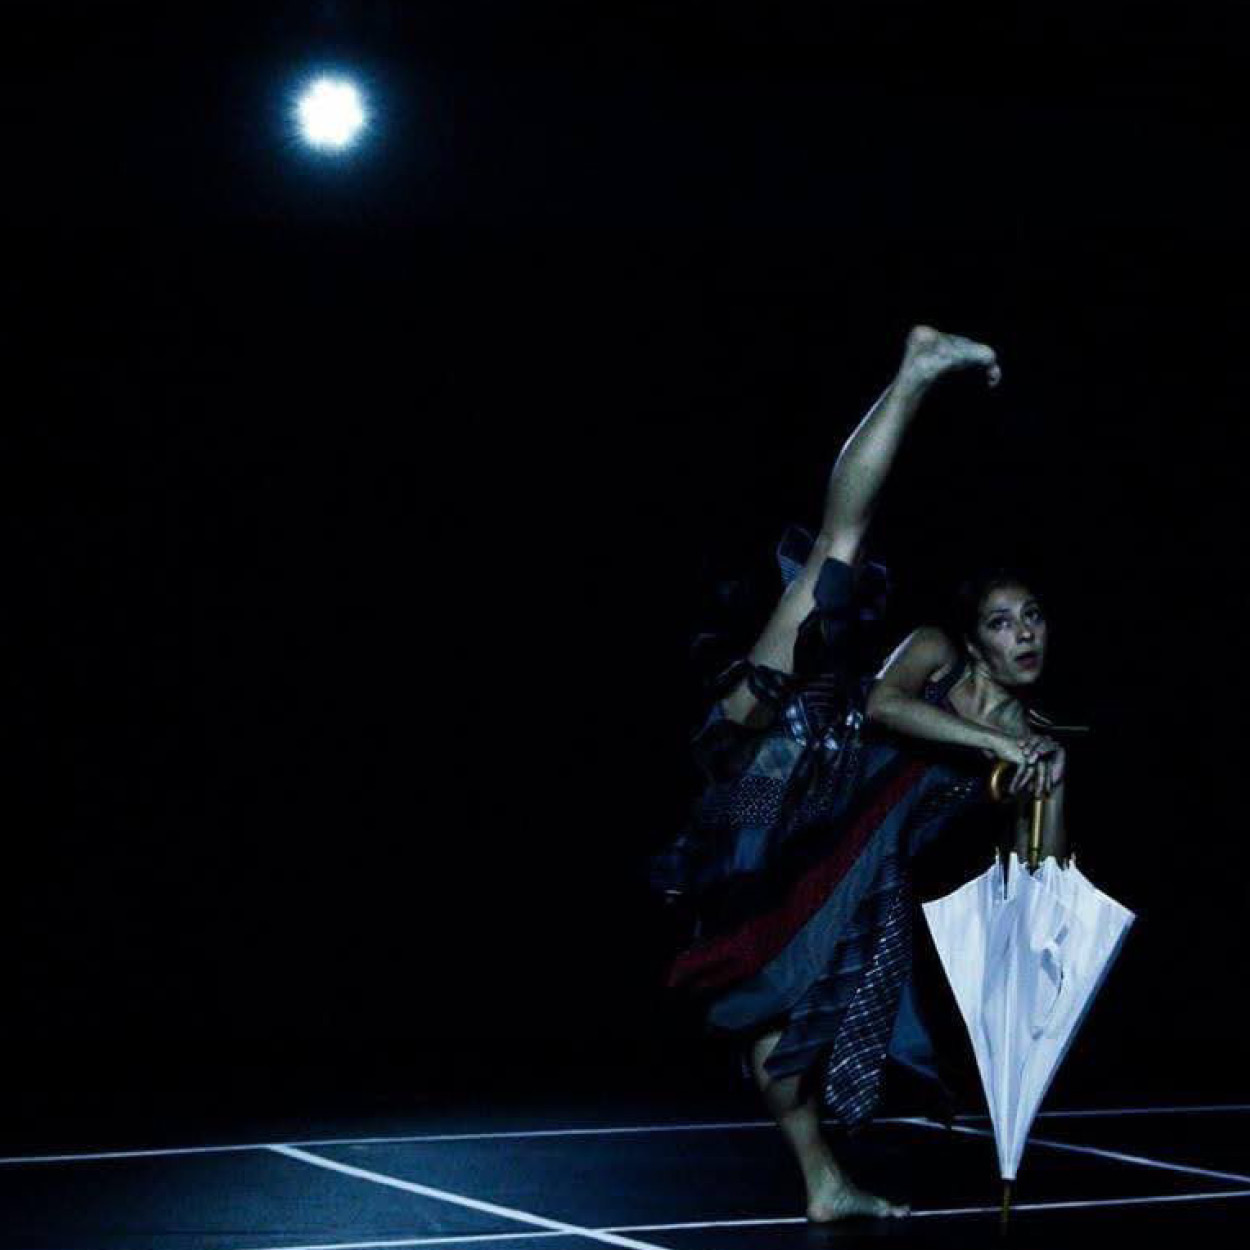 Stephanie Garcia dances on a dark stage with an umbrella 